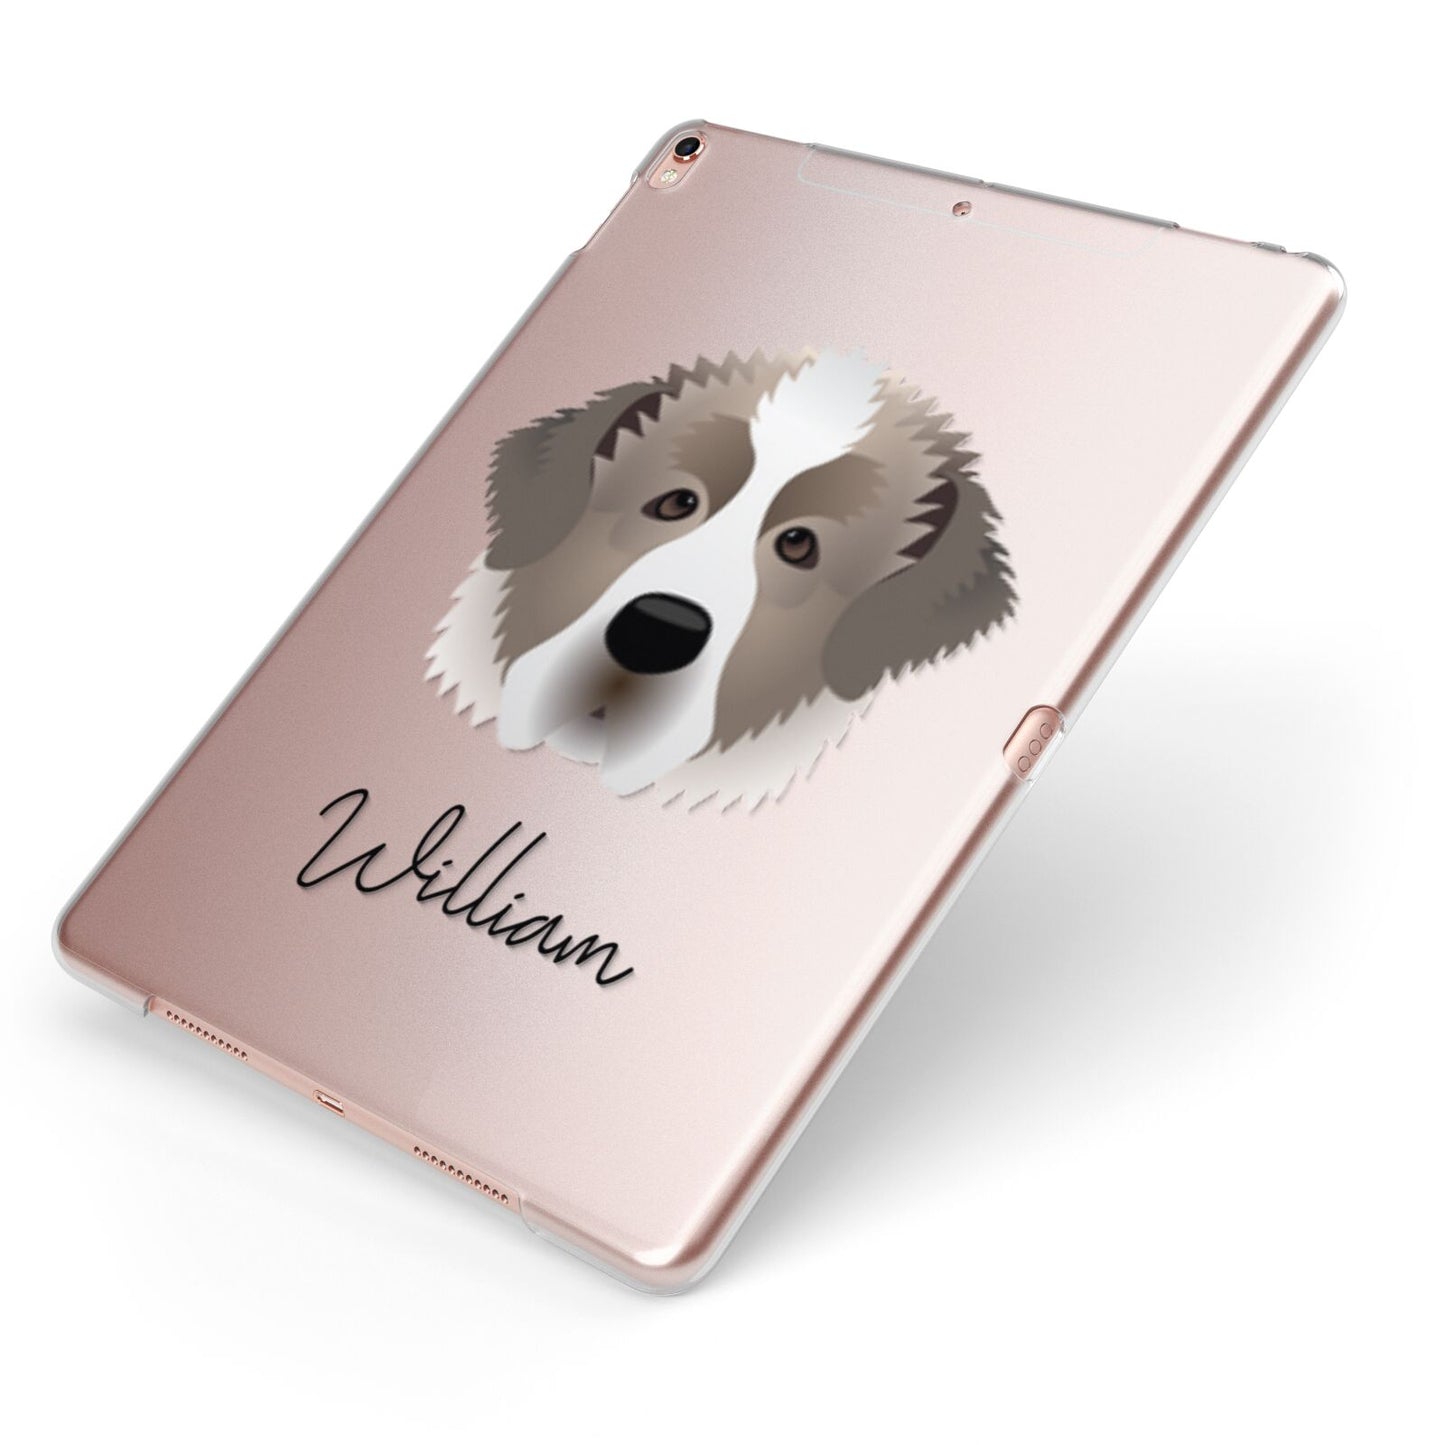 Pyrenean Mastiff Personalised Apple iPad Case on Rose Gold iPad Side View